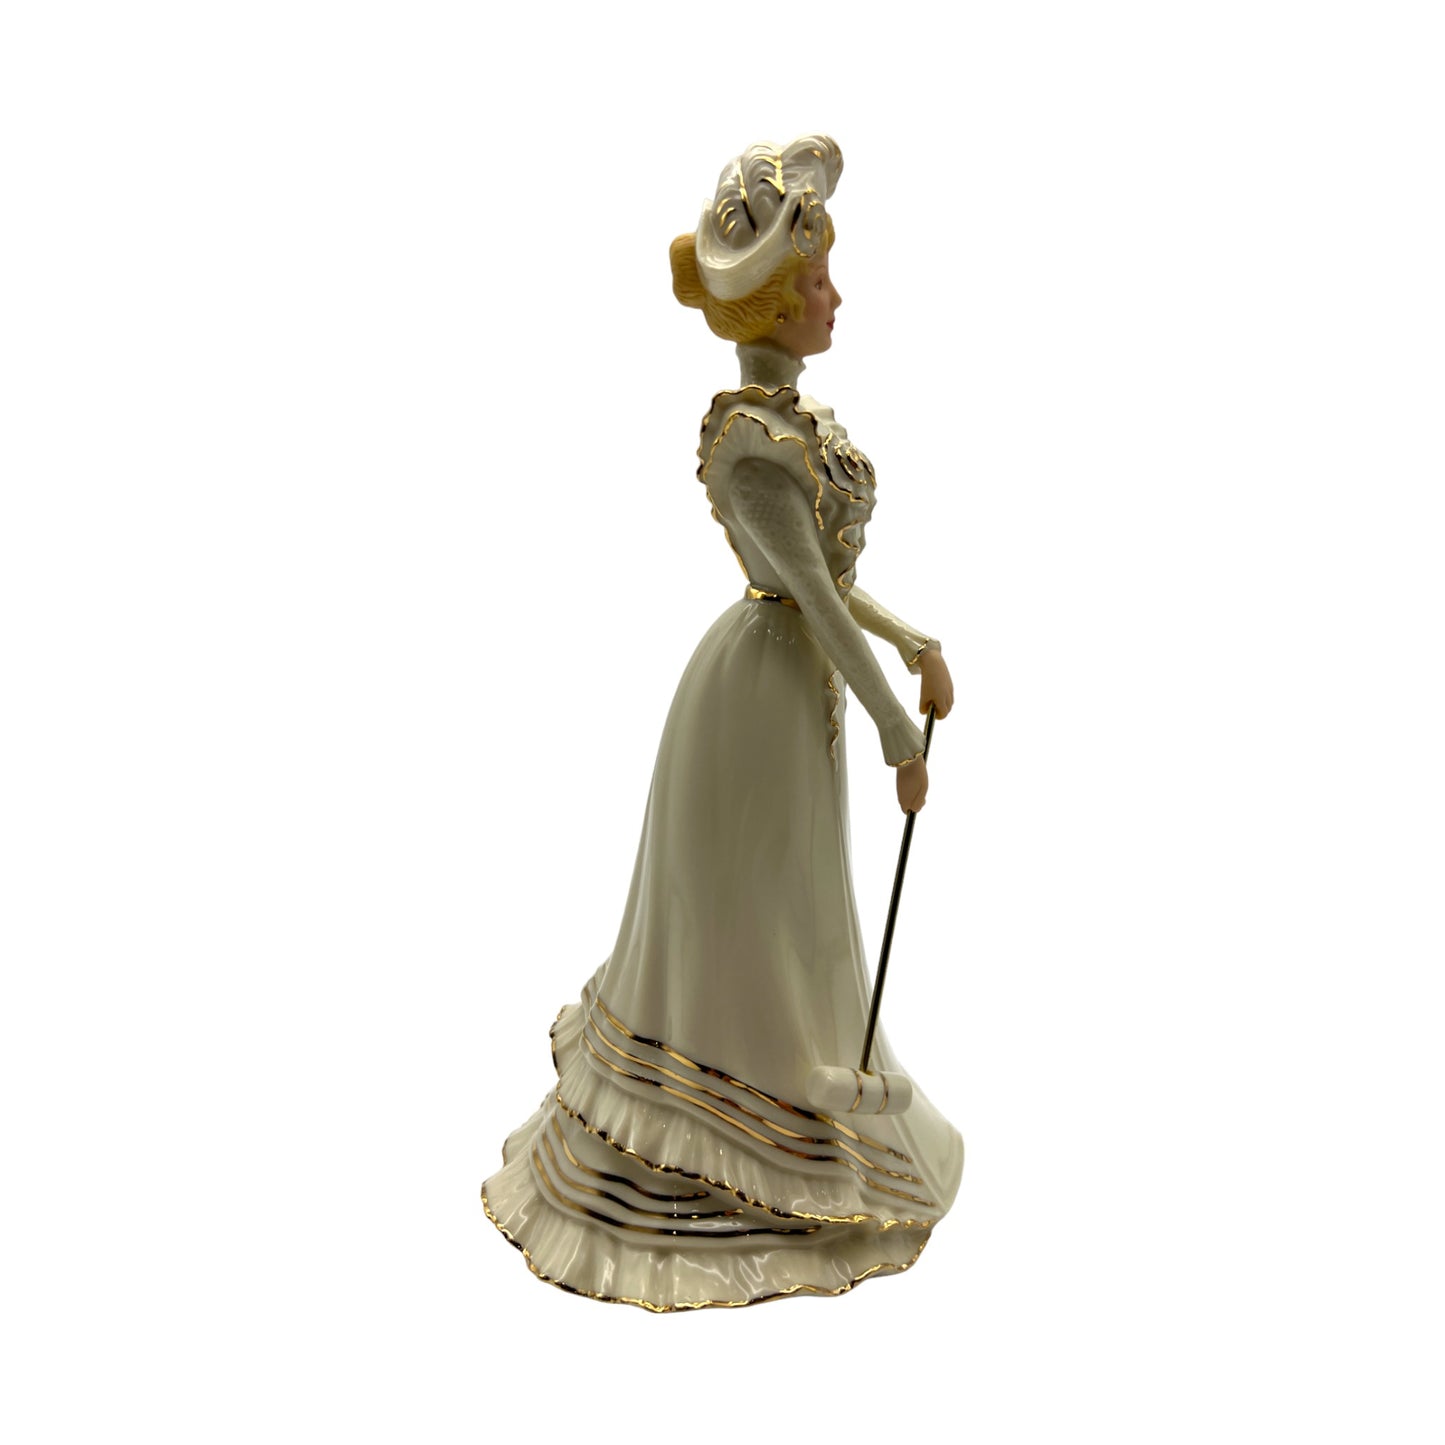 Lenox - Courtly Croquet Figurine - Victorian Ladies Of Fashion Collection - Original Box - 9.25"